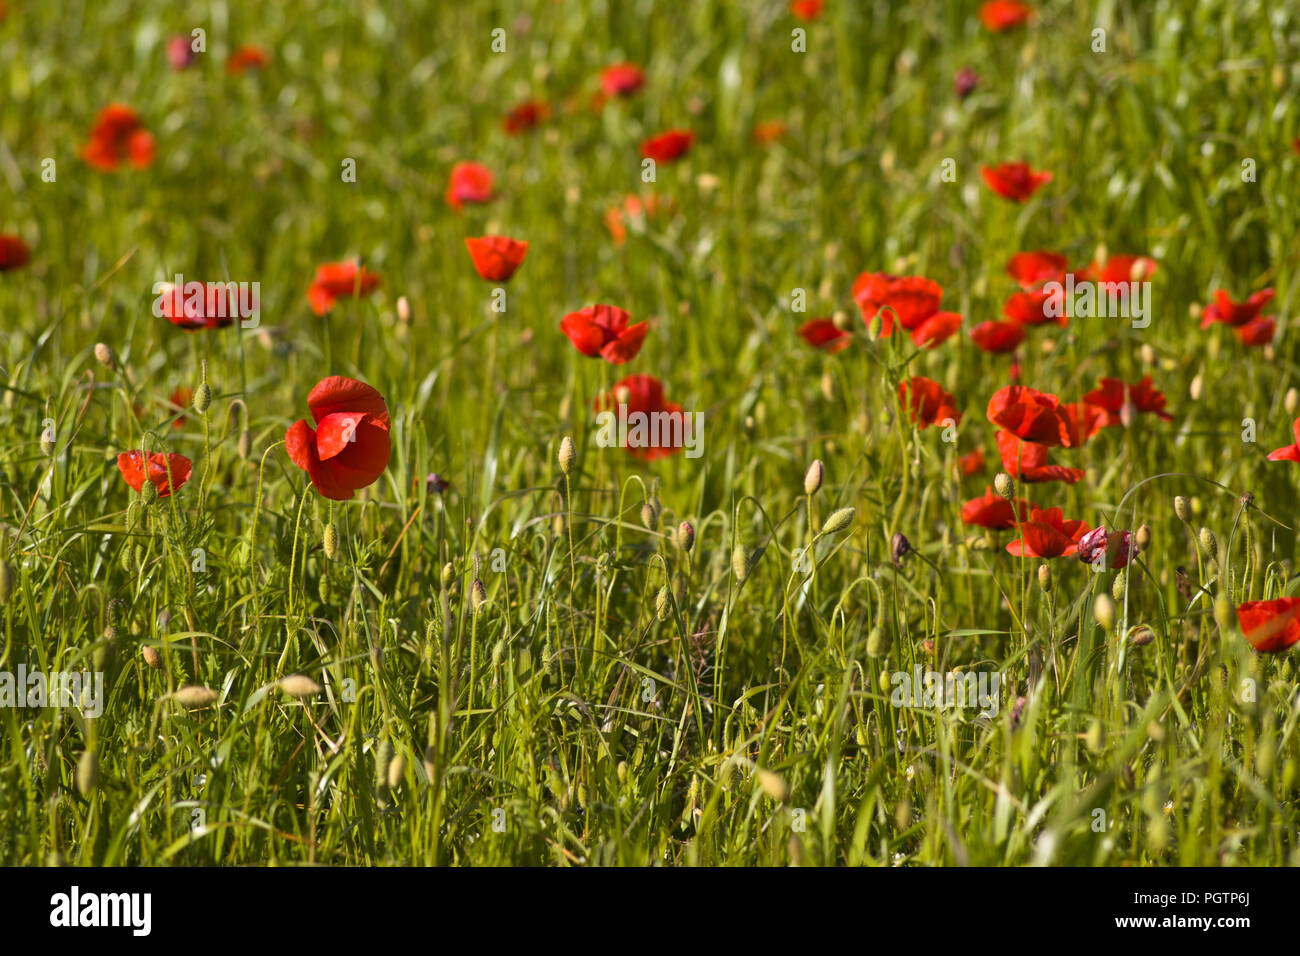 Poppies growing in a field near Lexos, part of the commune of Varen, Tarn et Garonne, Occitanie, France in springtime Stock Photo